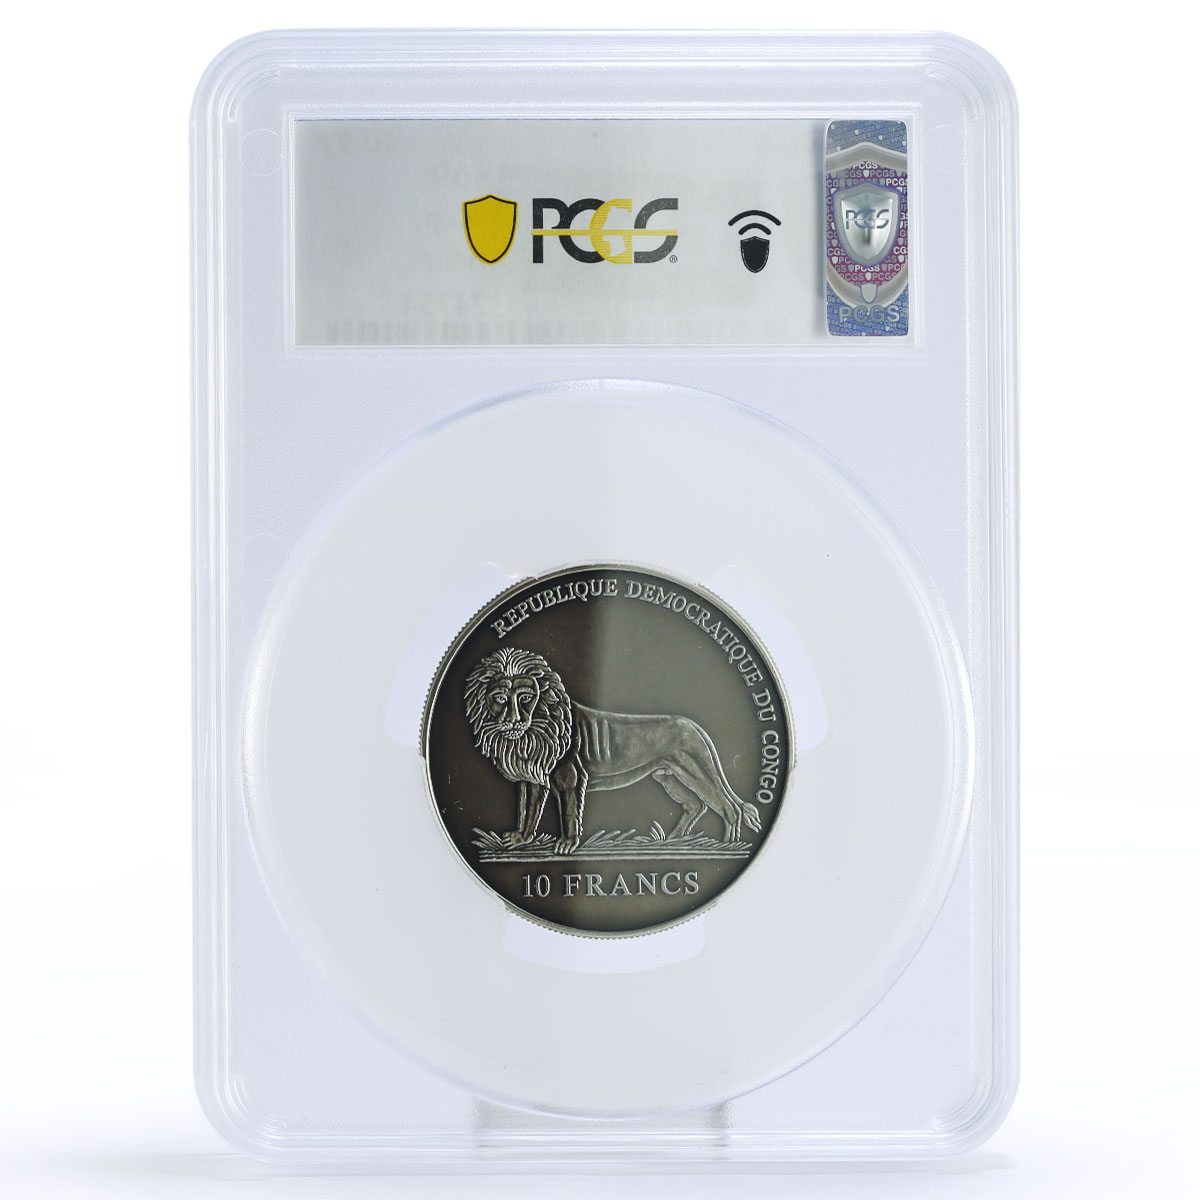 Congo 10 francs 50 Year Rotating Calendar MS69 PCGS silver coin 2004